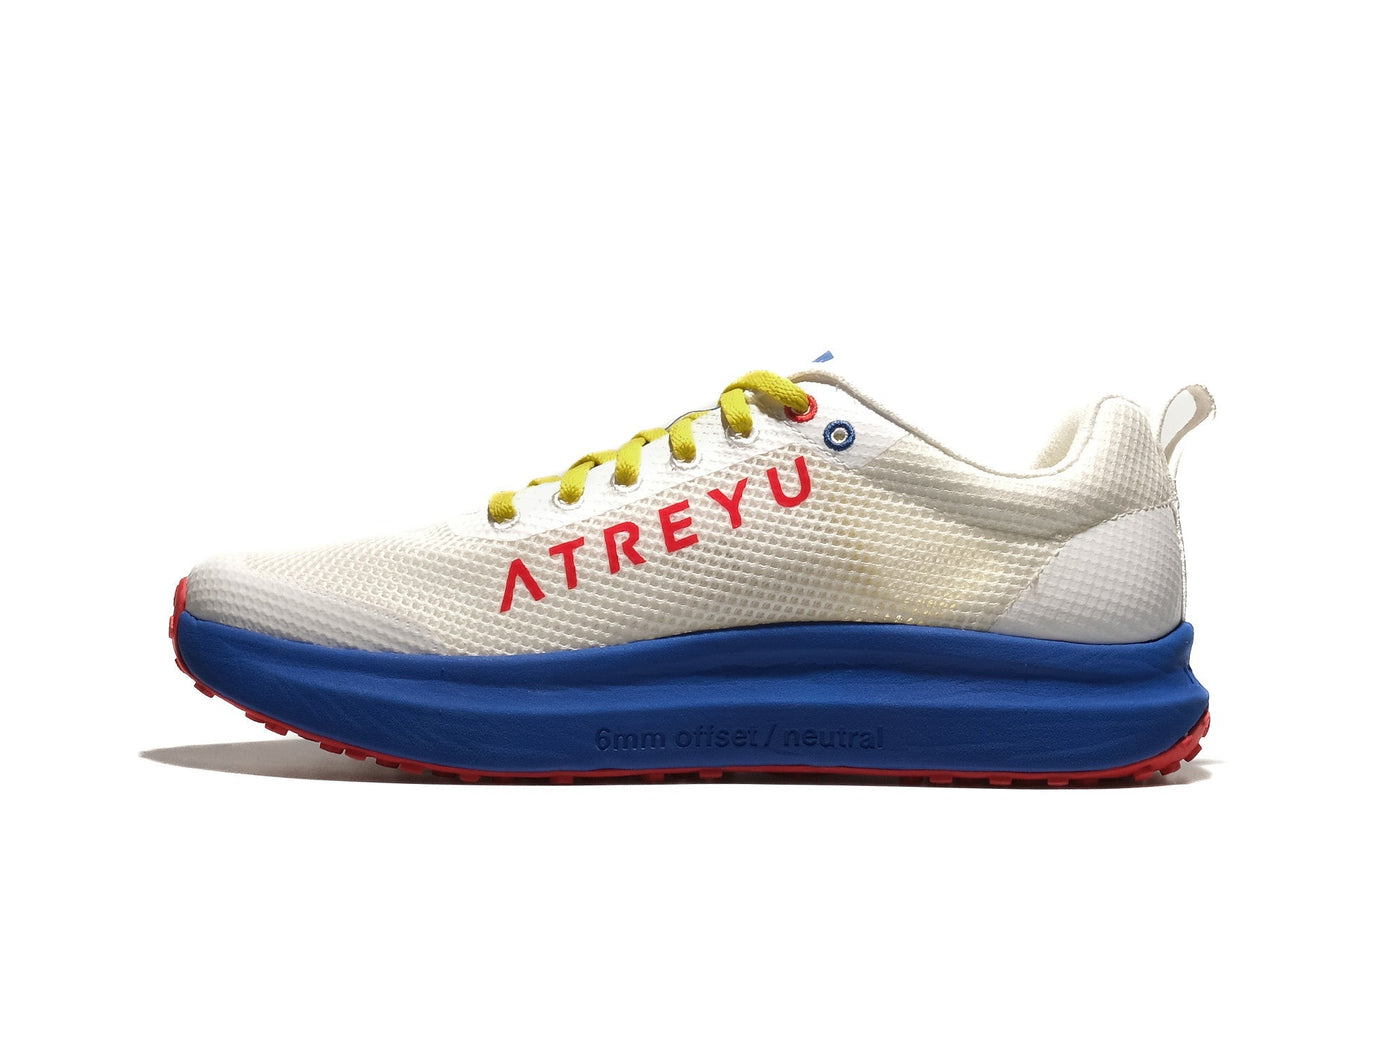 Daily Trainer - Gently Used - Atreyu Running Company 